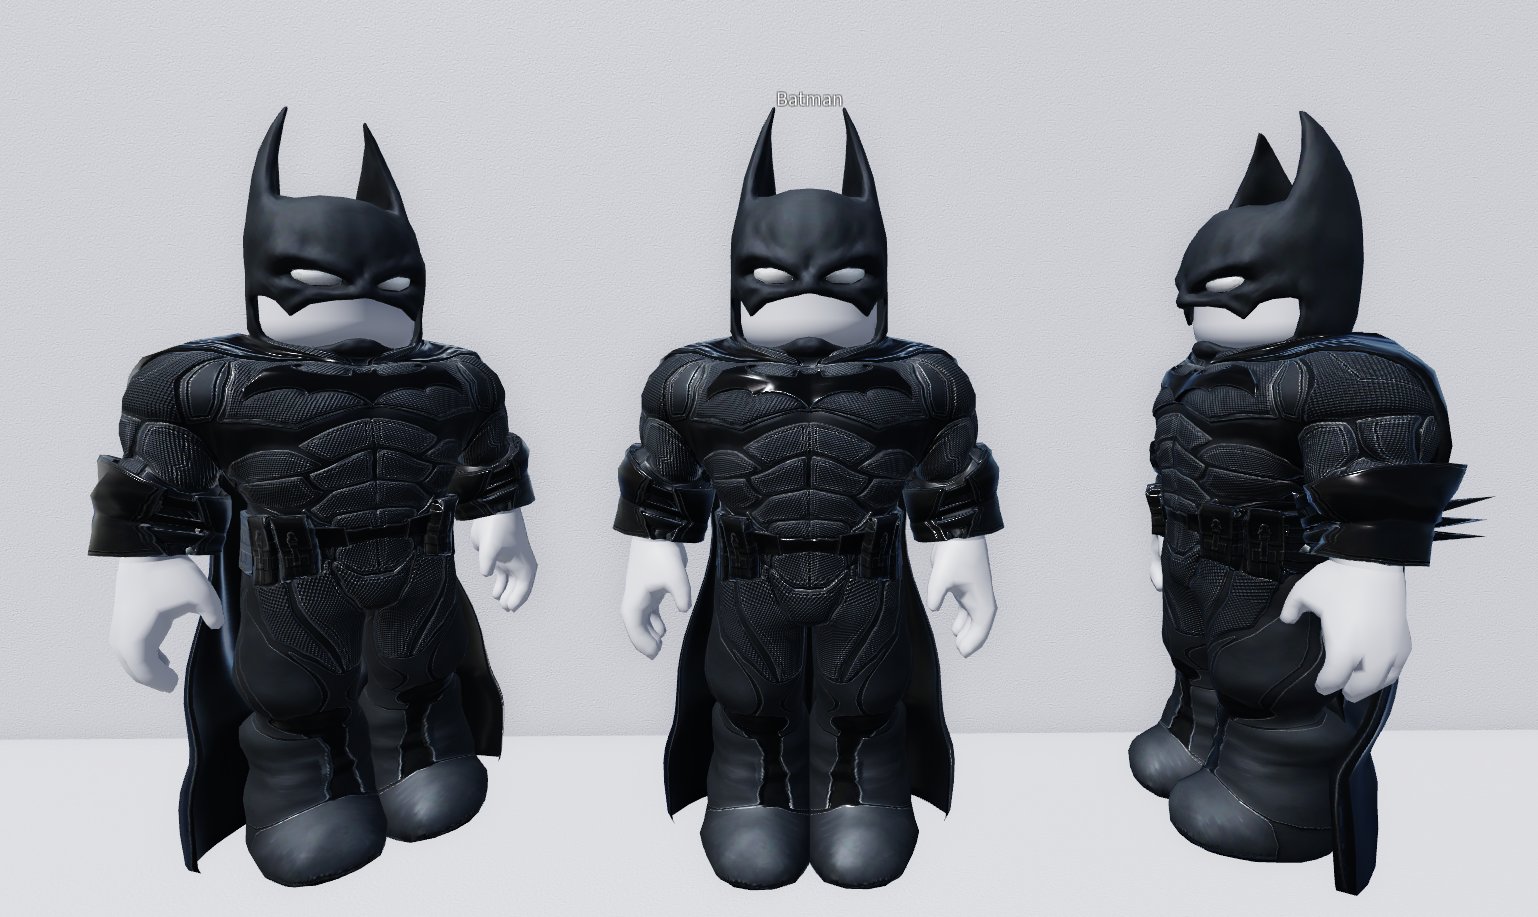 Animated Series' Batman Suits! : r/robloxgamedev